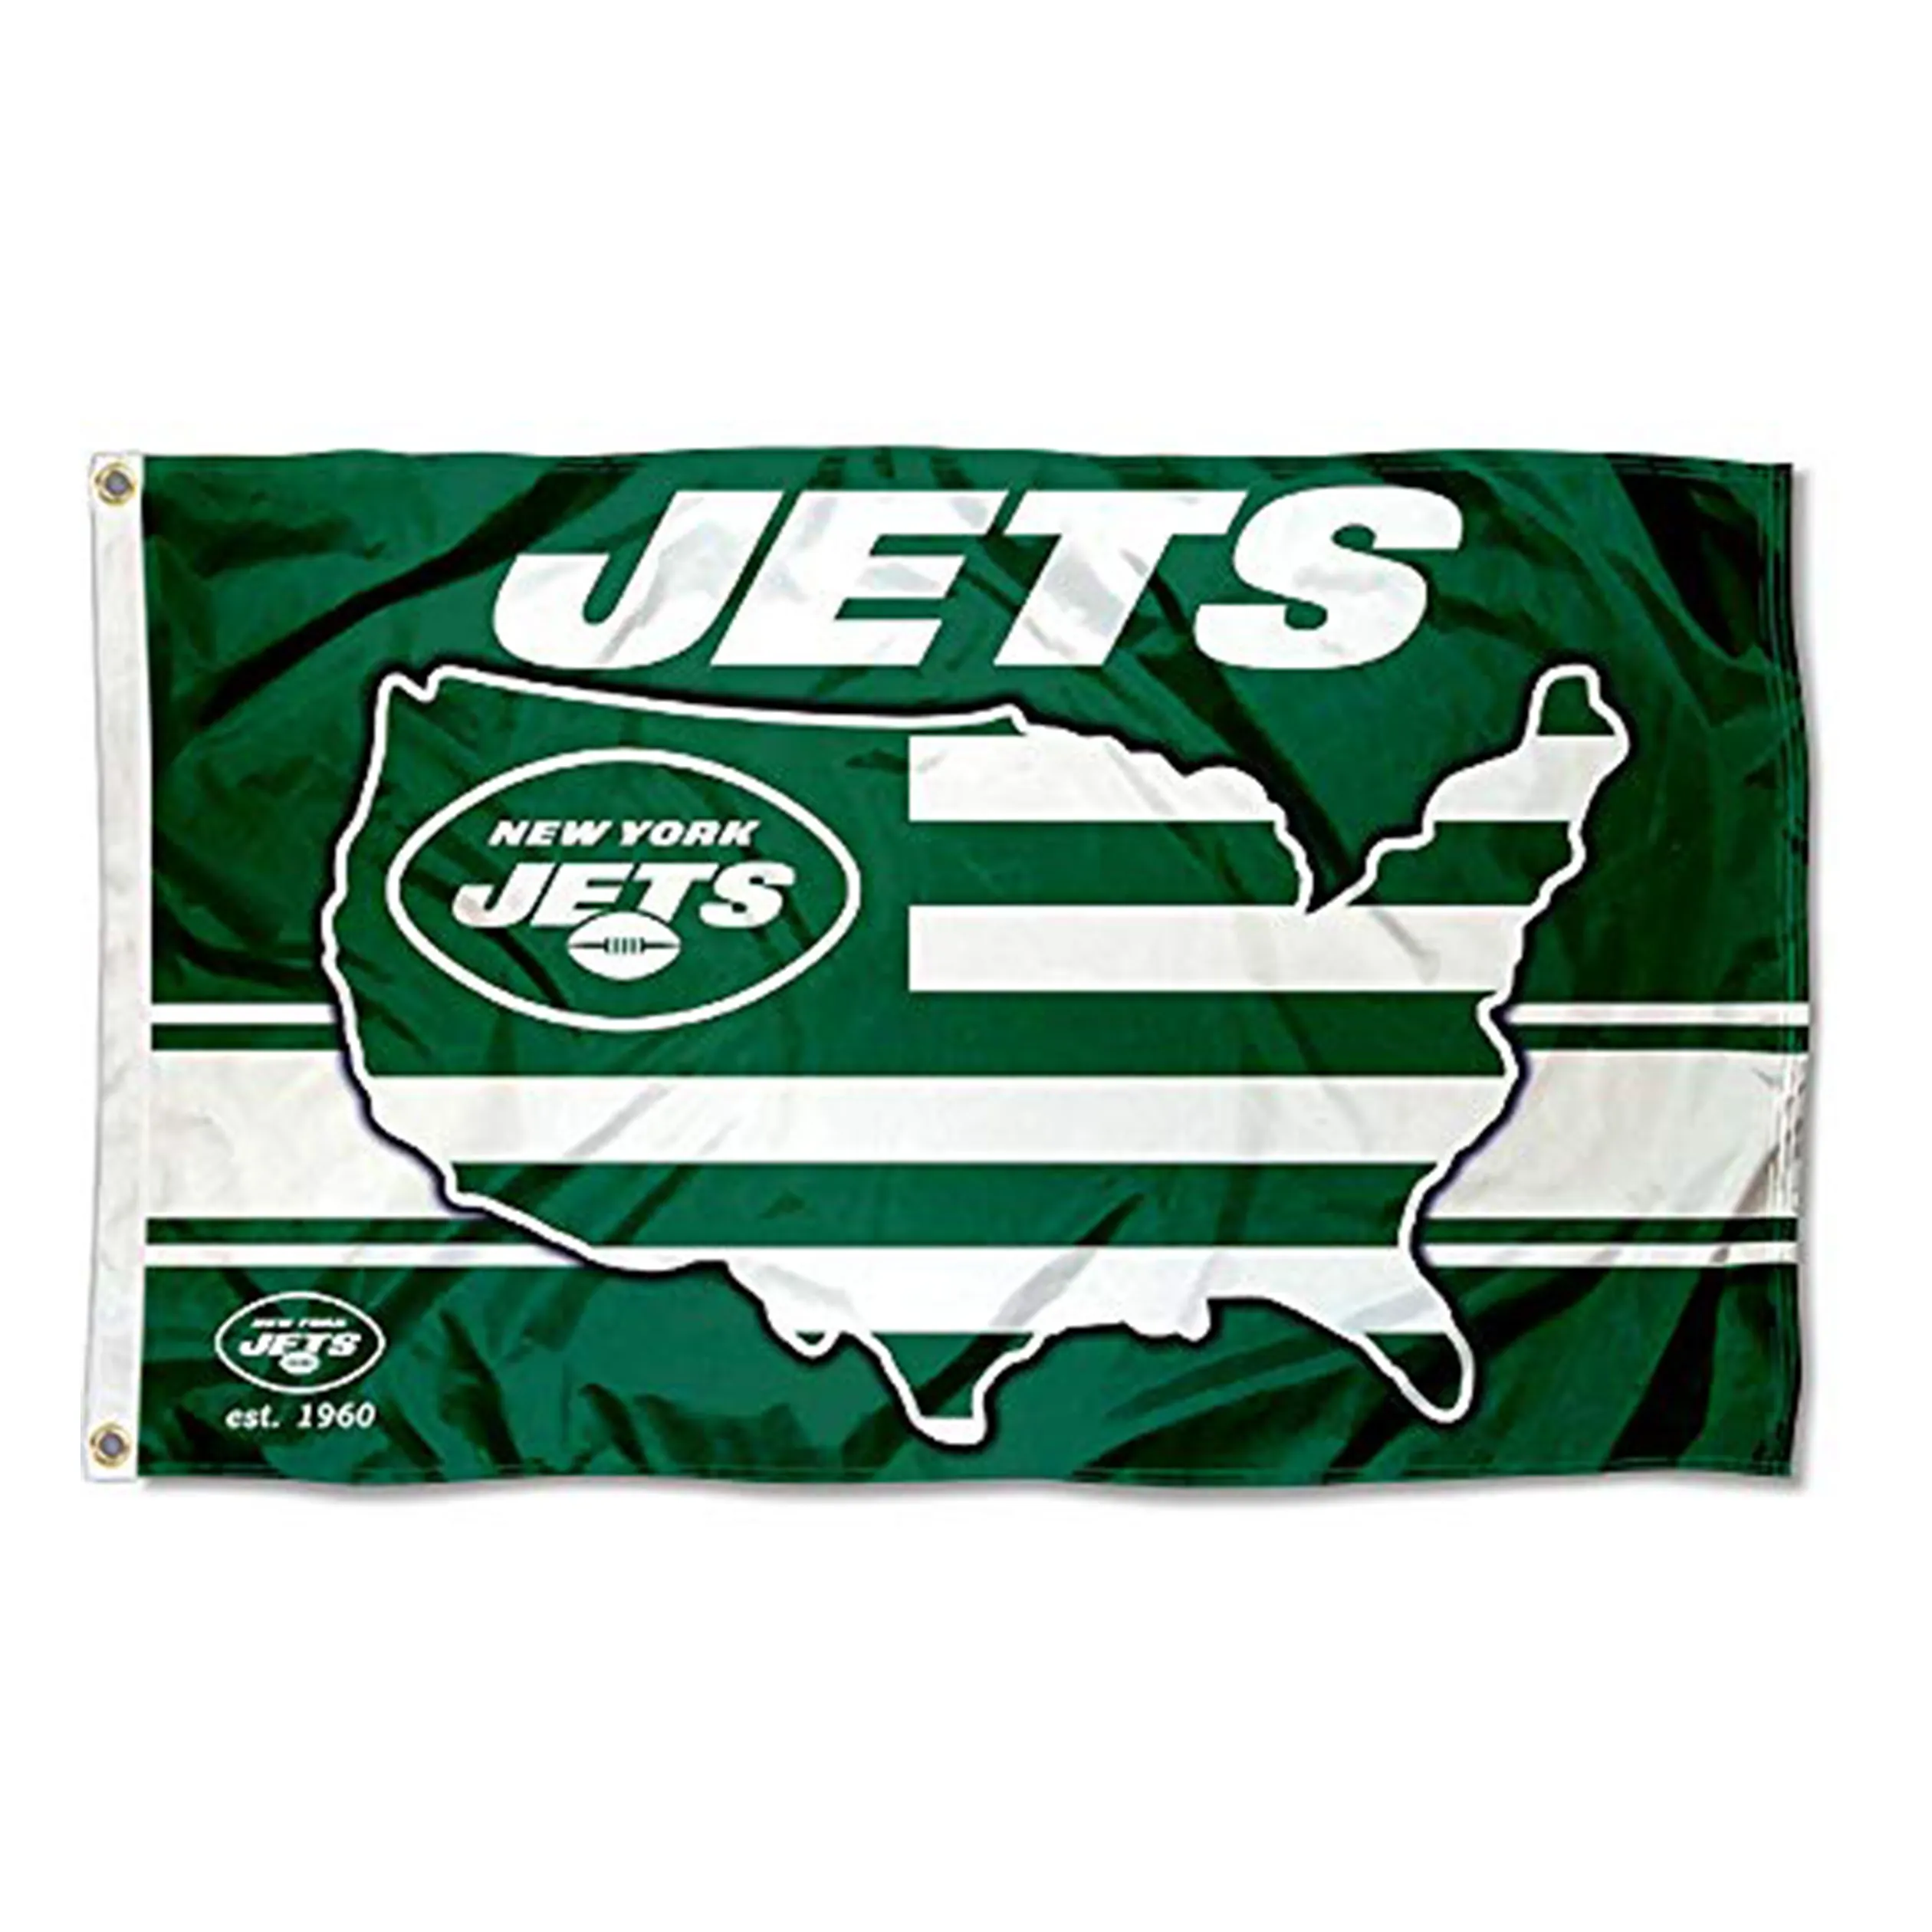 Individuelle NFL AFC New York Jets Flagge beliebige Größe beliebiges Design einzeln doppelseitig bedruckt Polyester Fußball Sportverein Flagge Banner